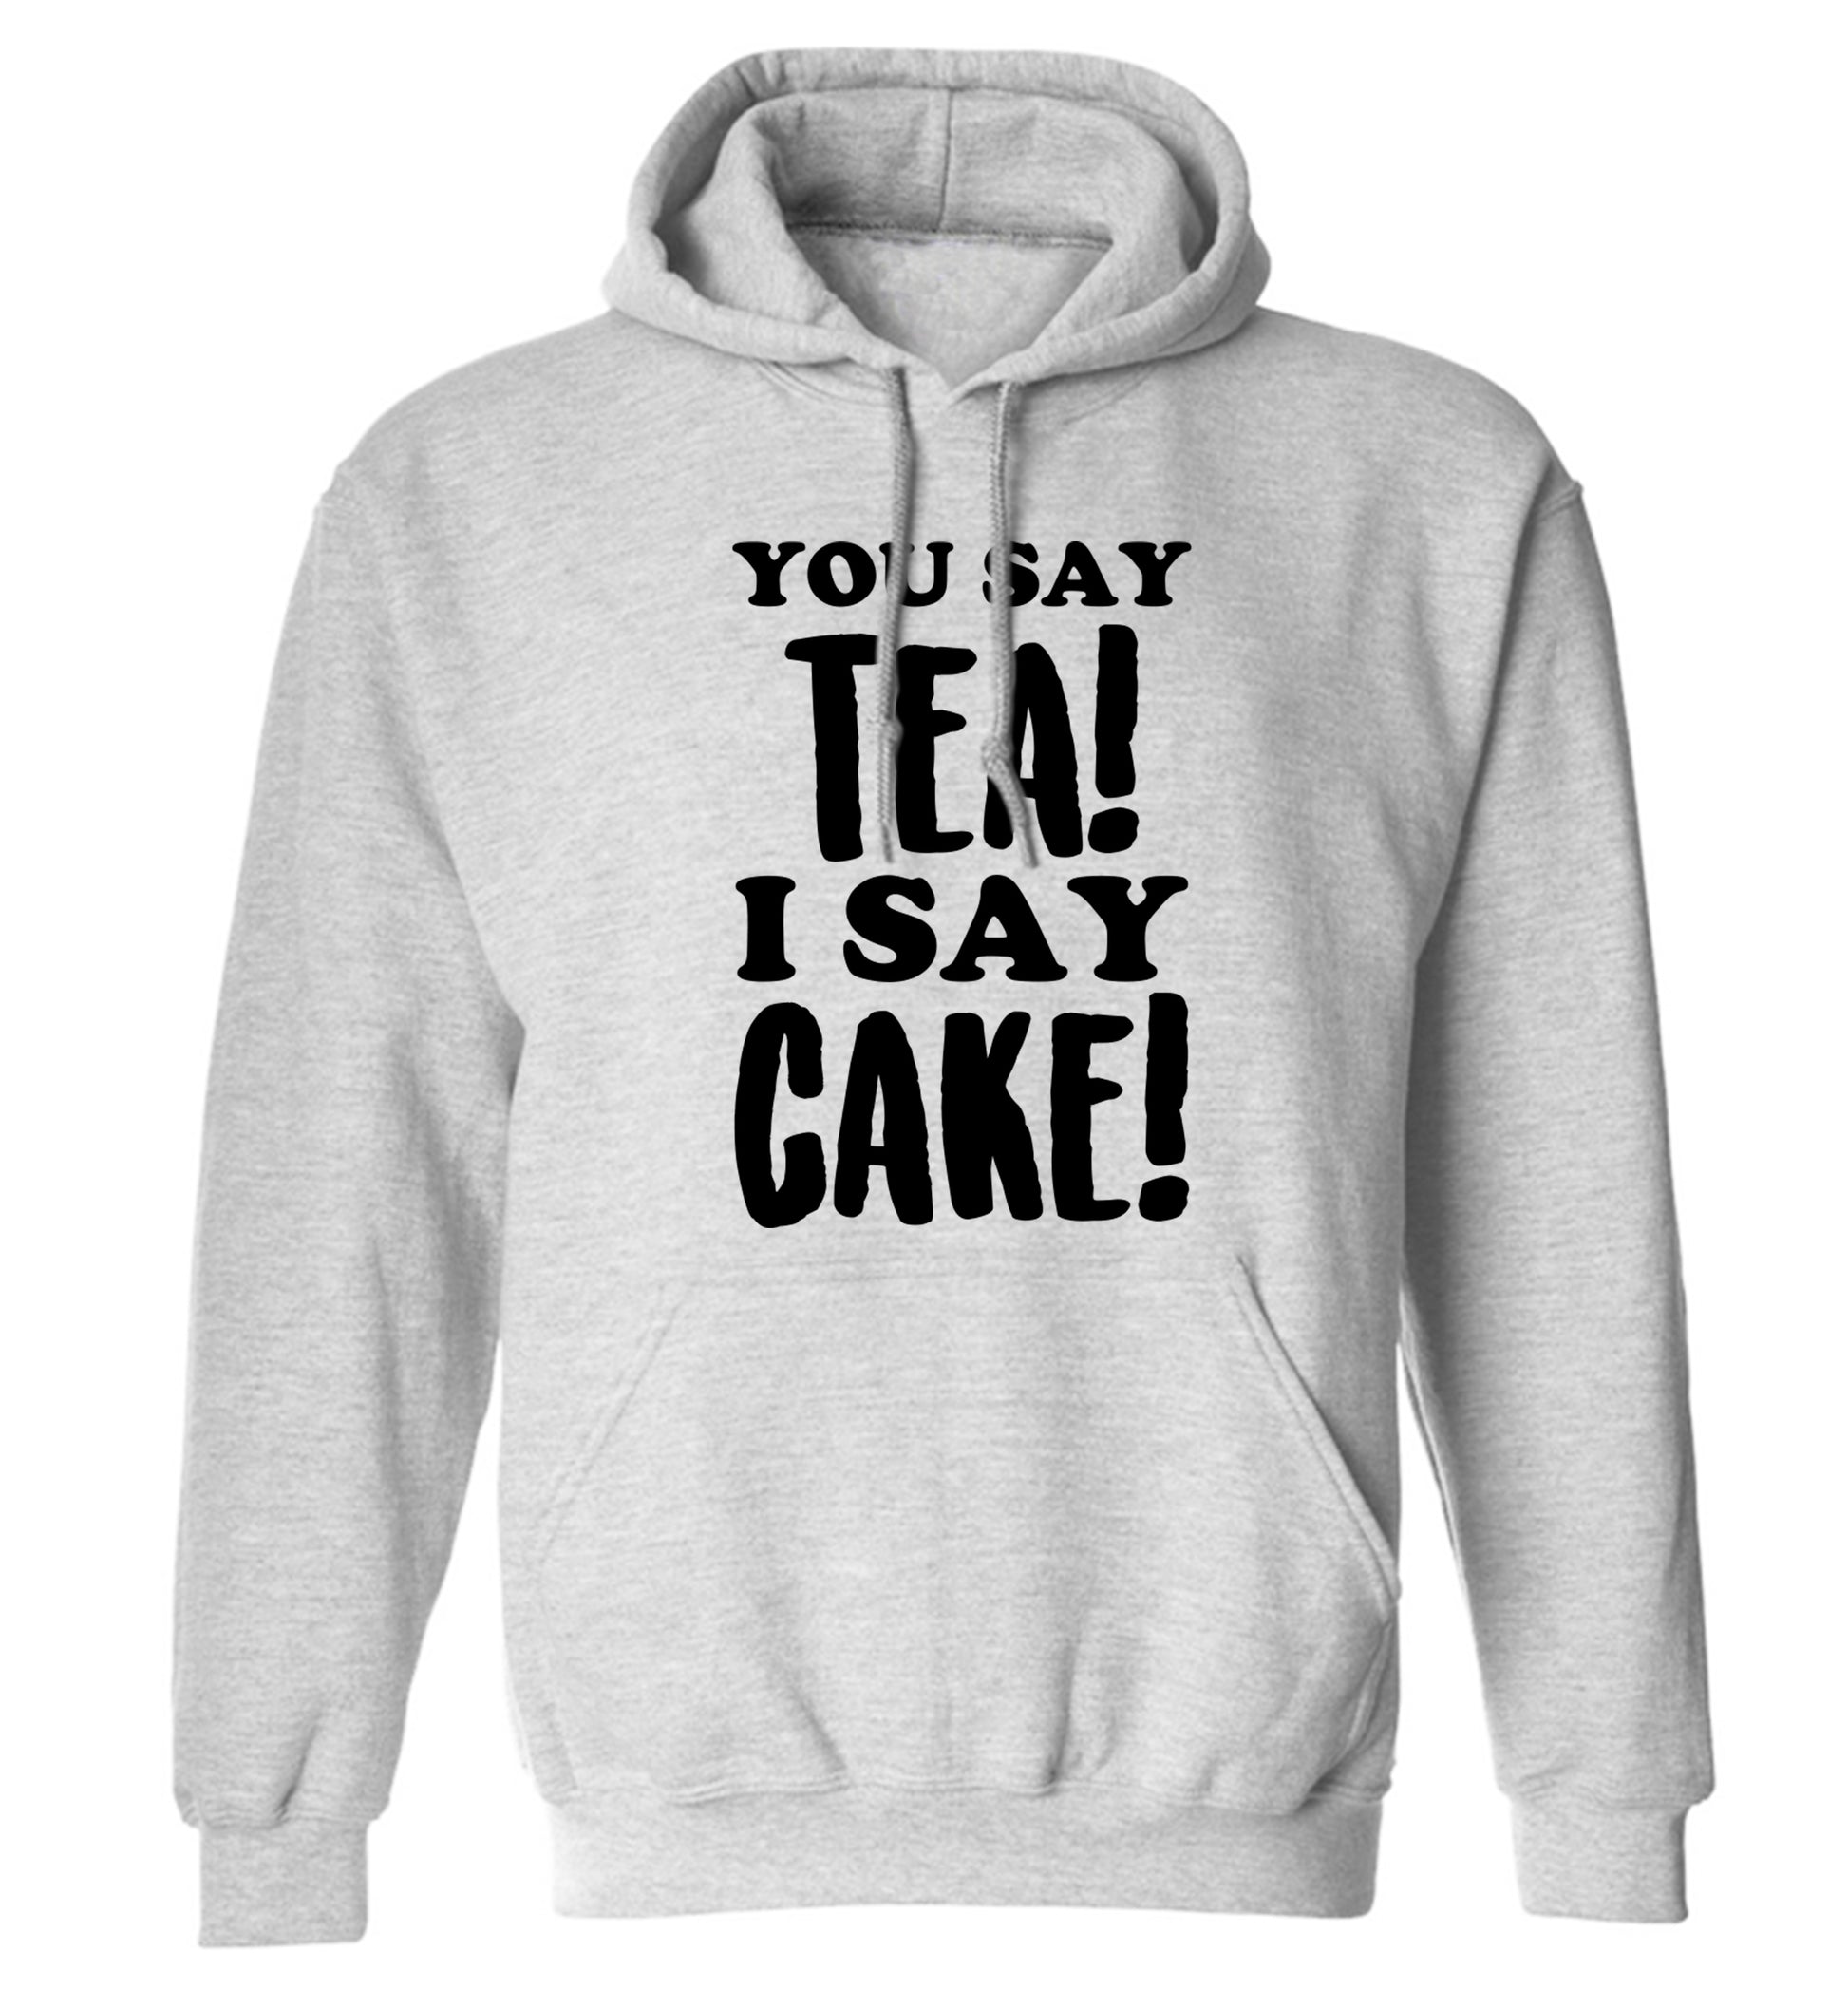 You say tea I say cake! adults unisex grey hoodie 2XL